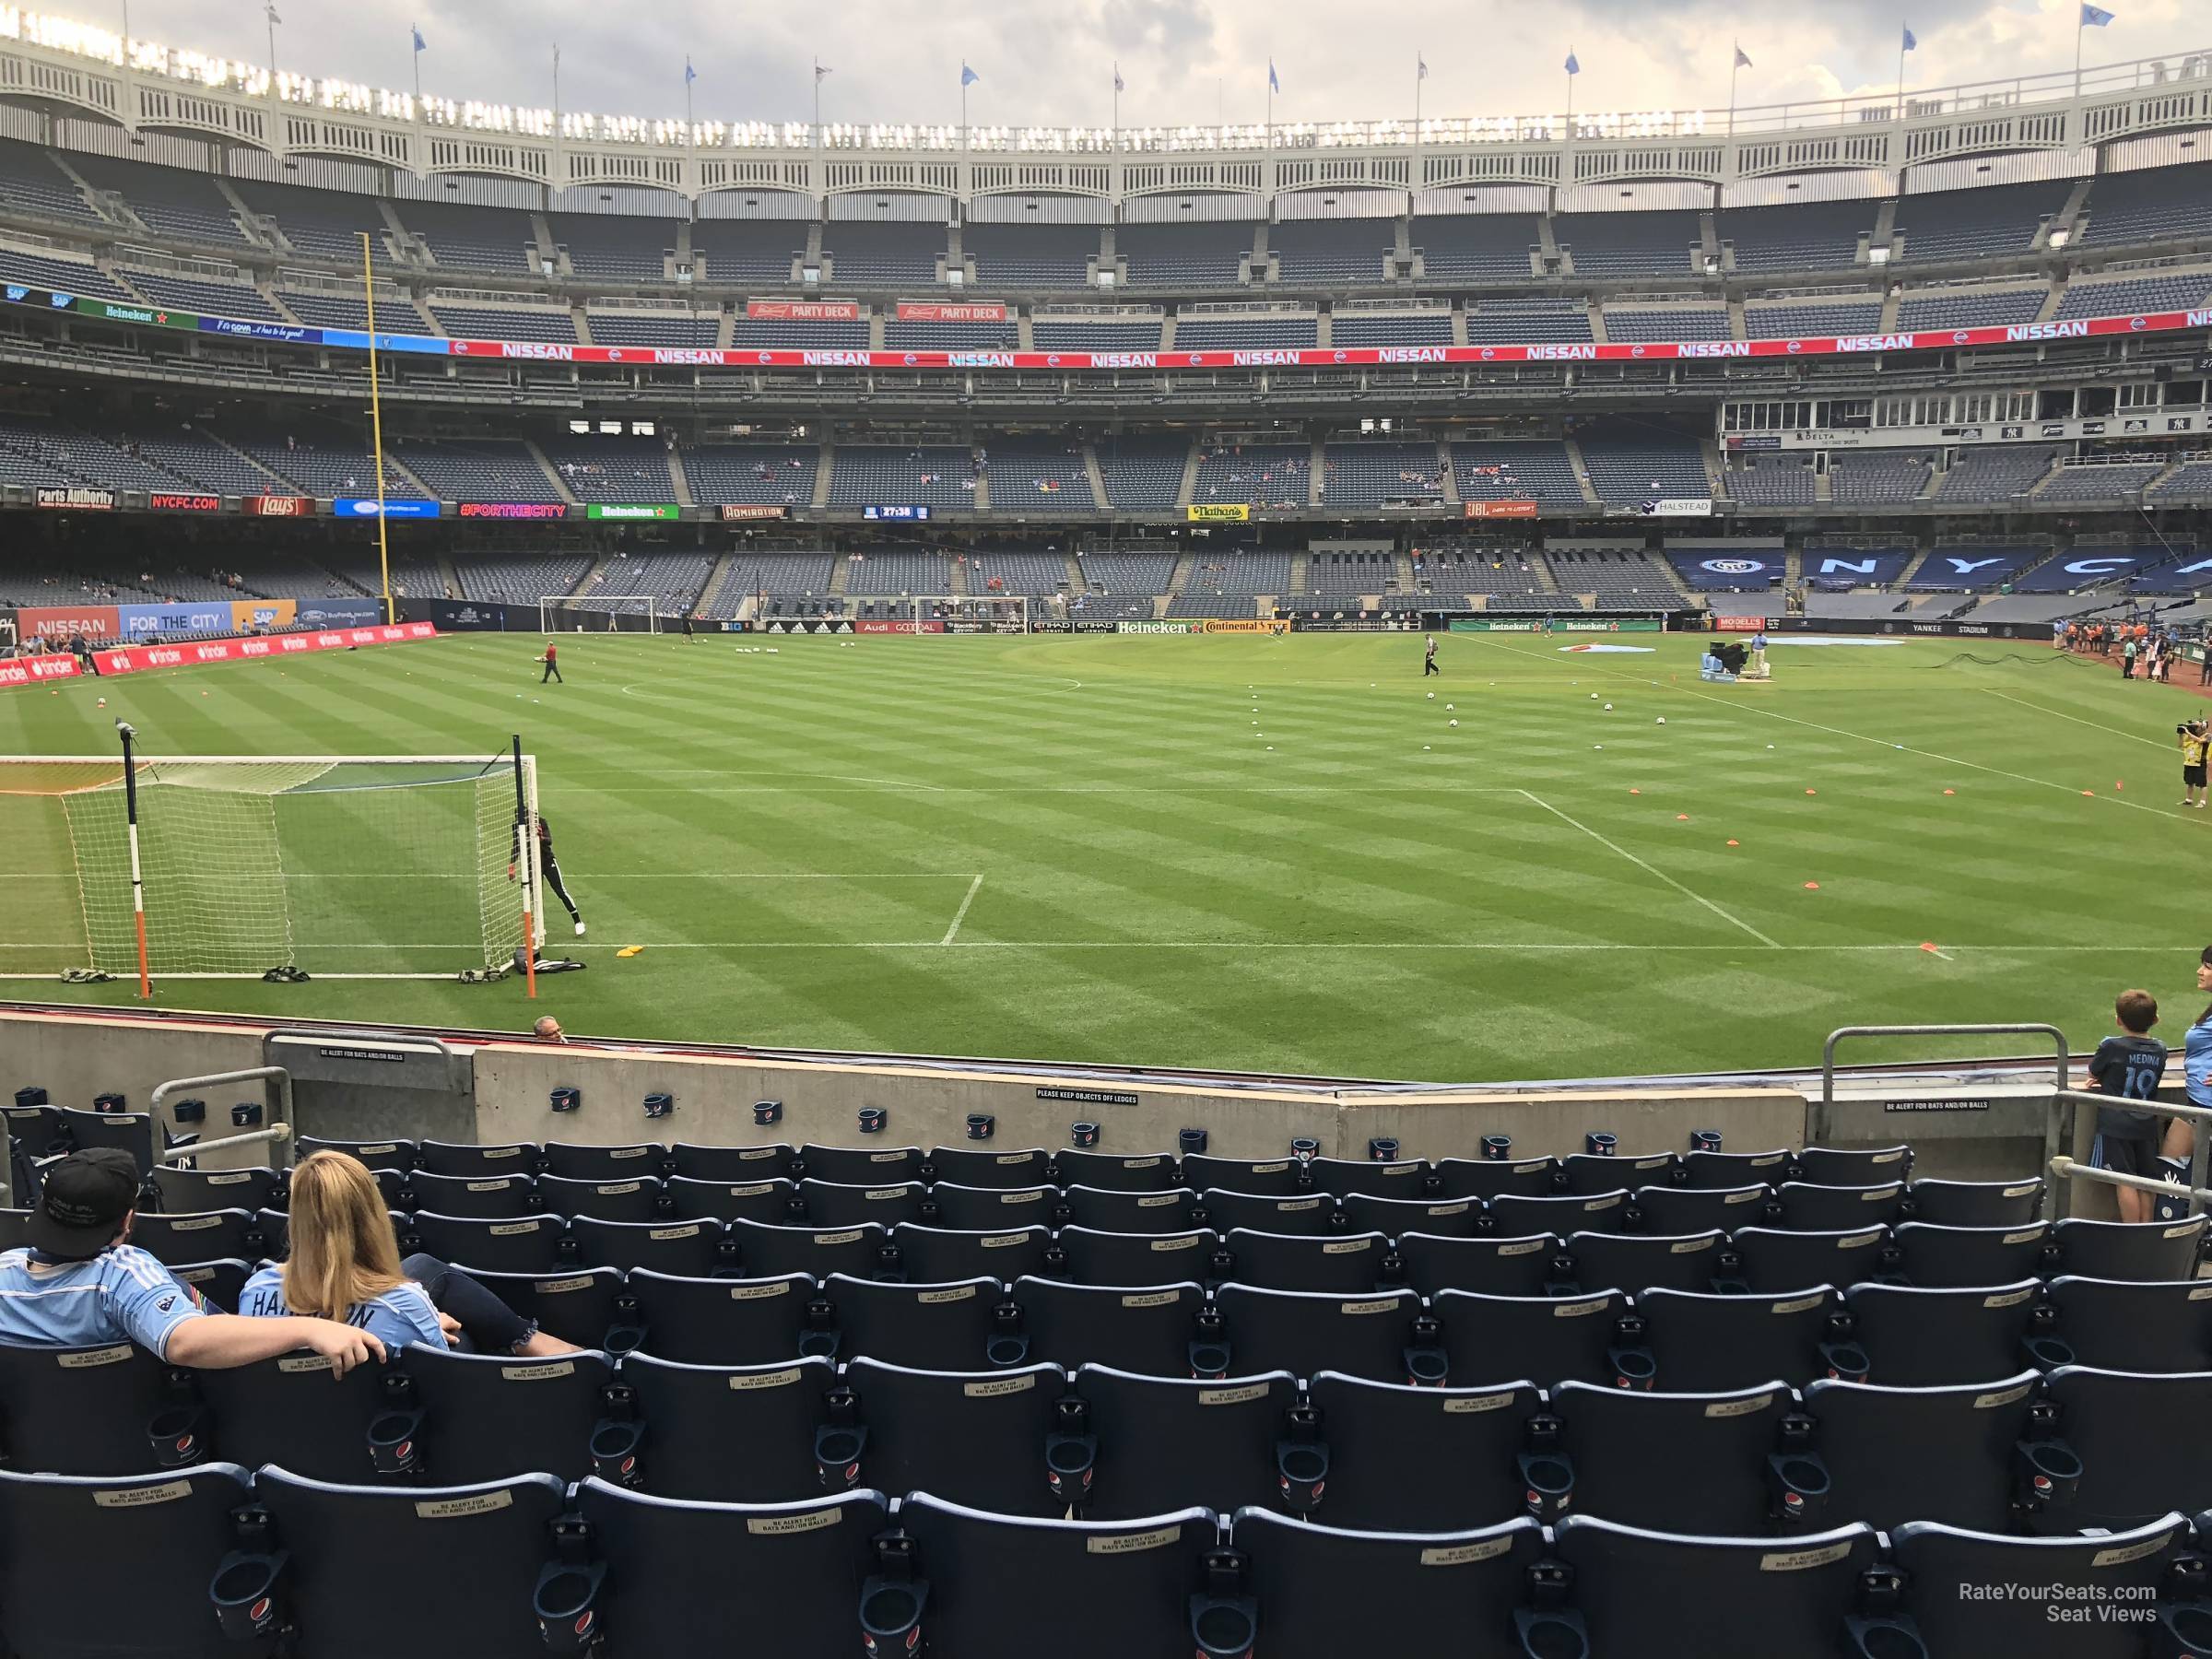 Section 134 at Yankee Stadium 